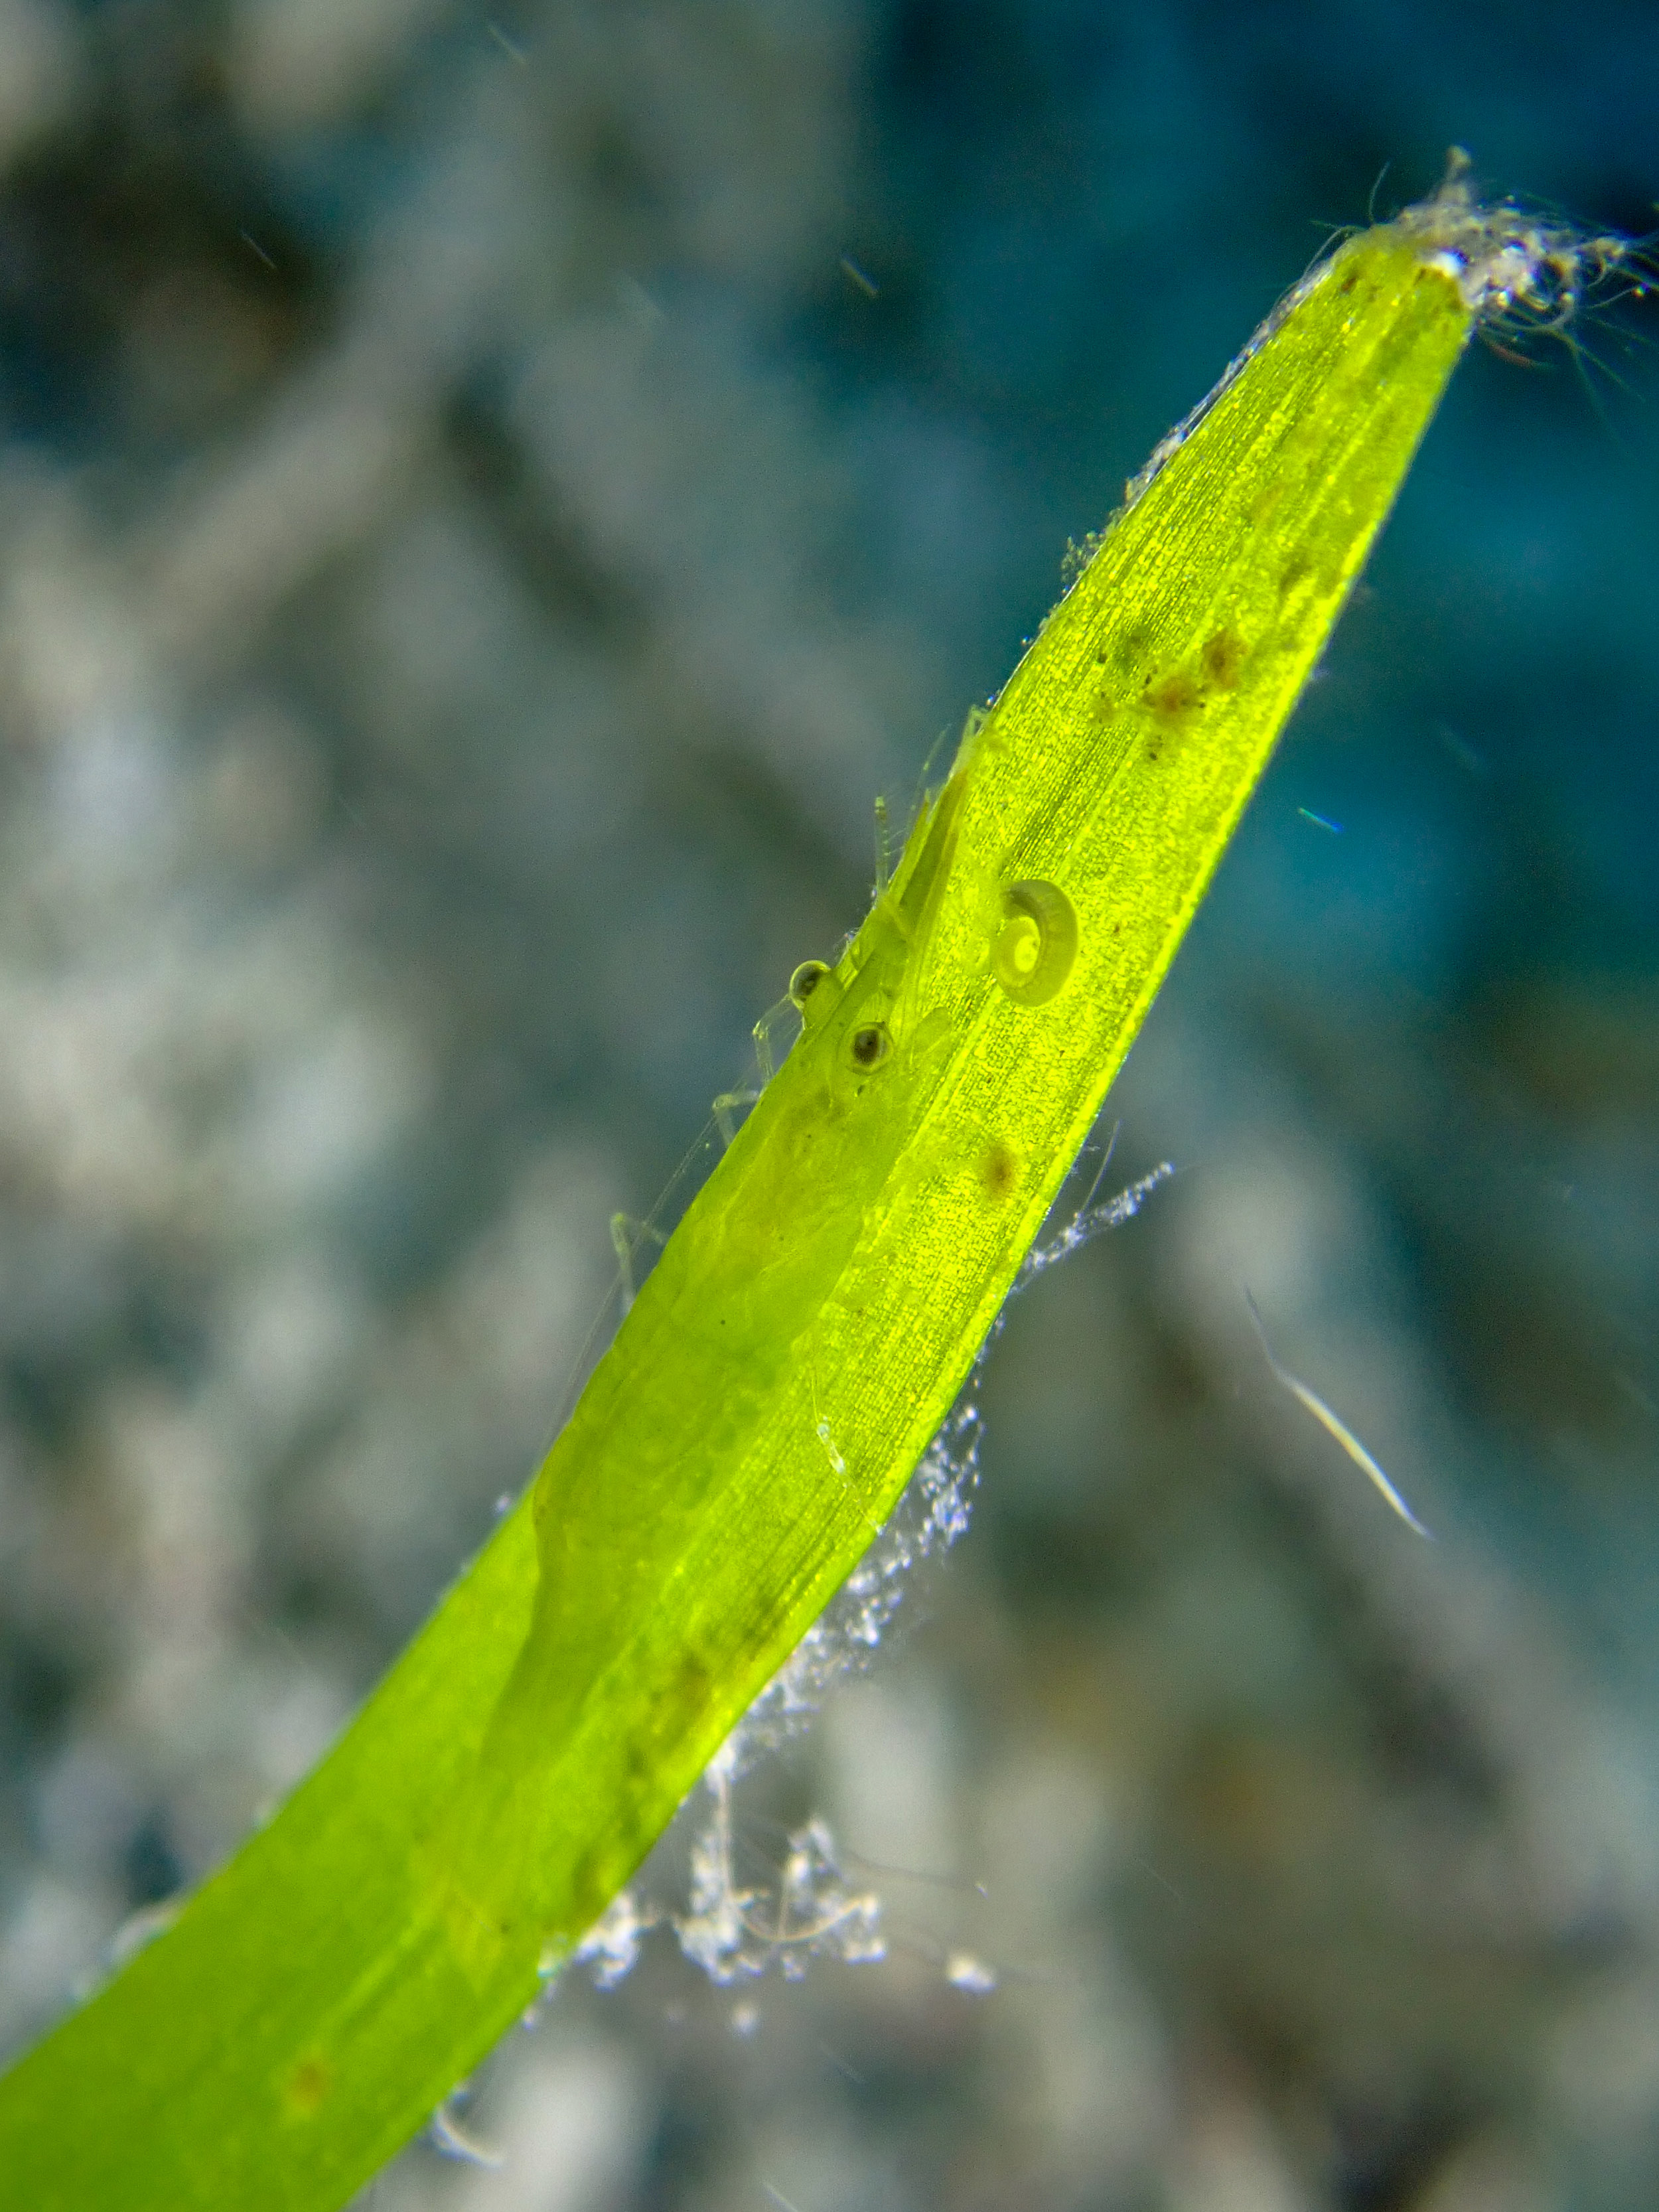 Bignose seagrass shrimp - Latreutes pymoeus (<1cm), Widu Harbour, Witu Islands